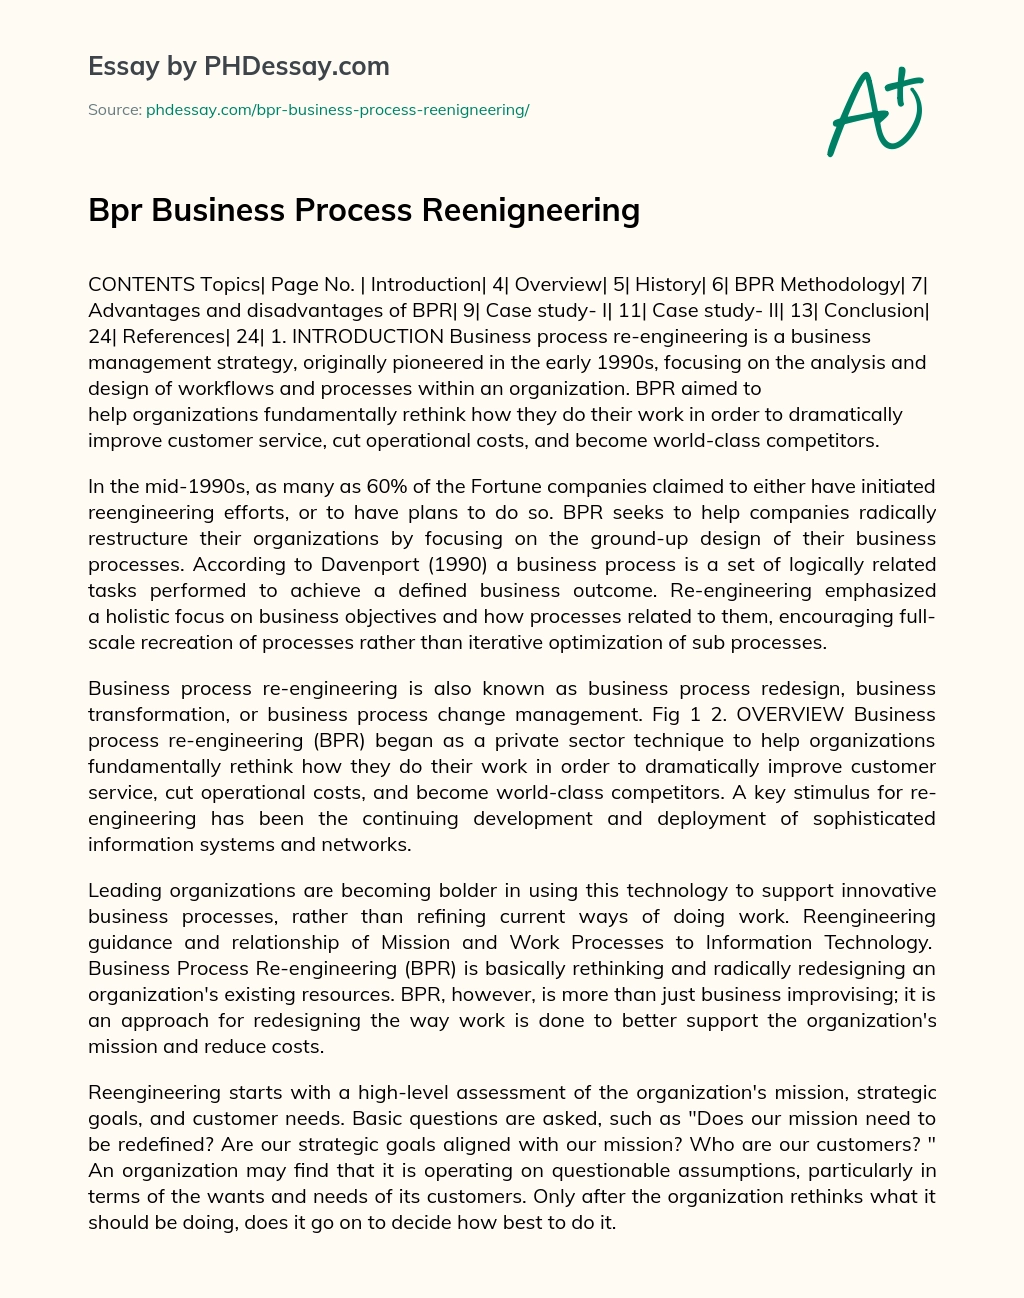 Bpr Business Process Reenigneering essay